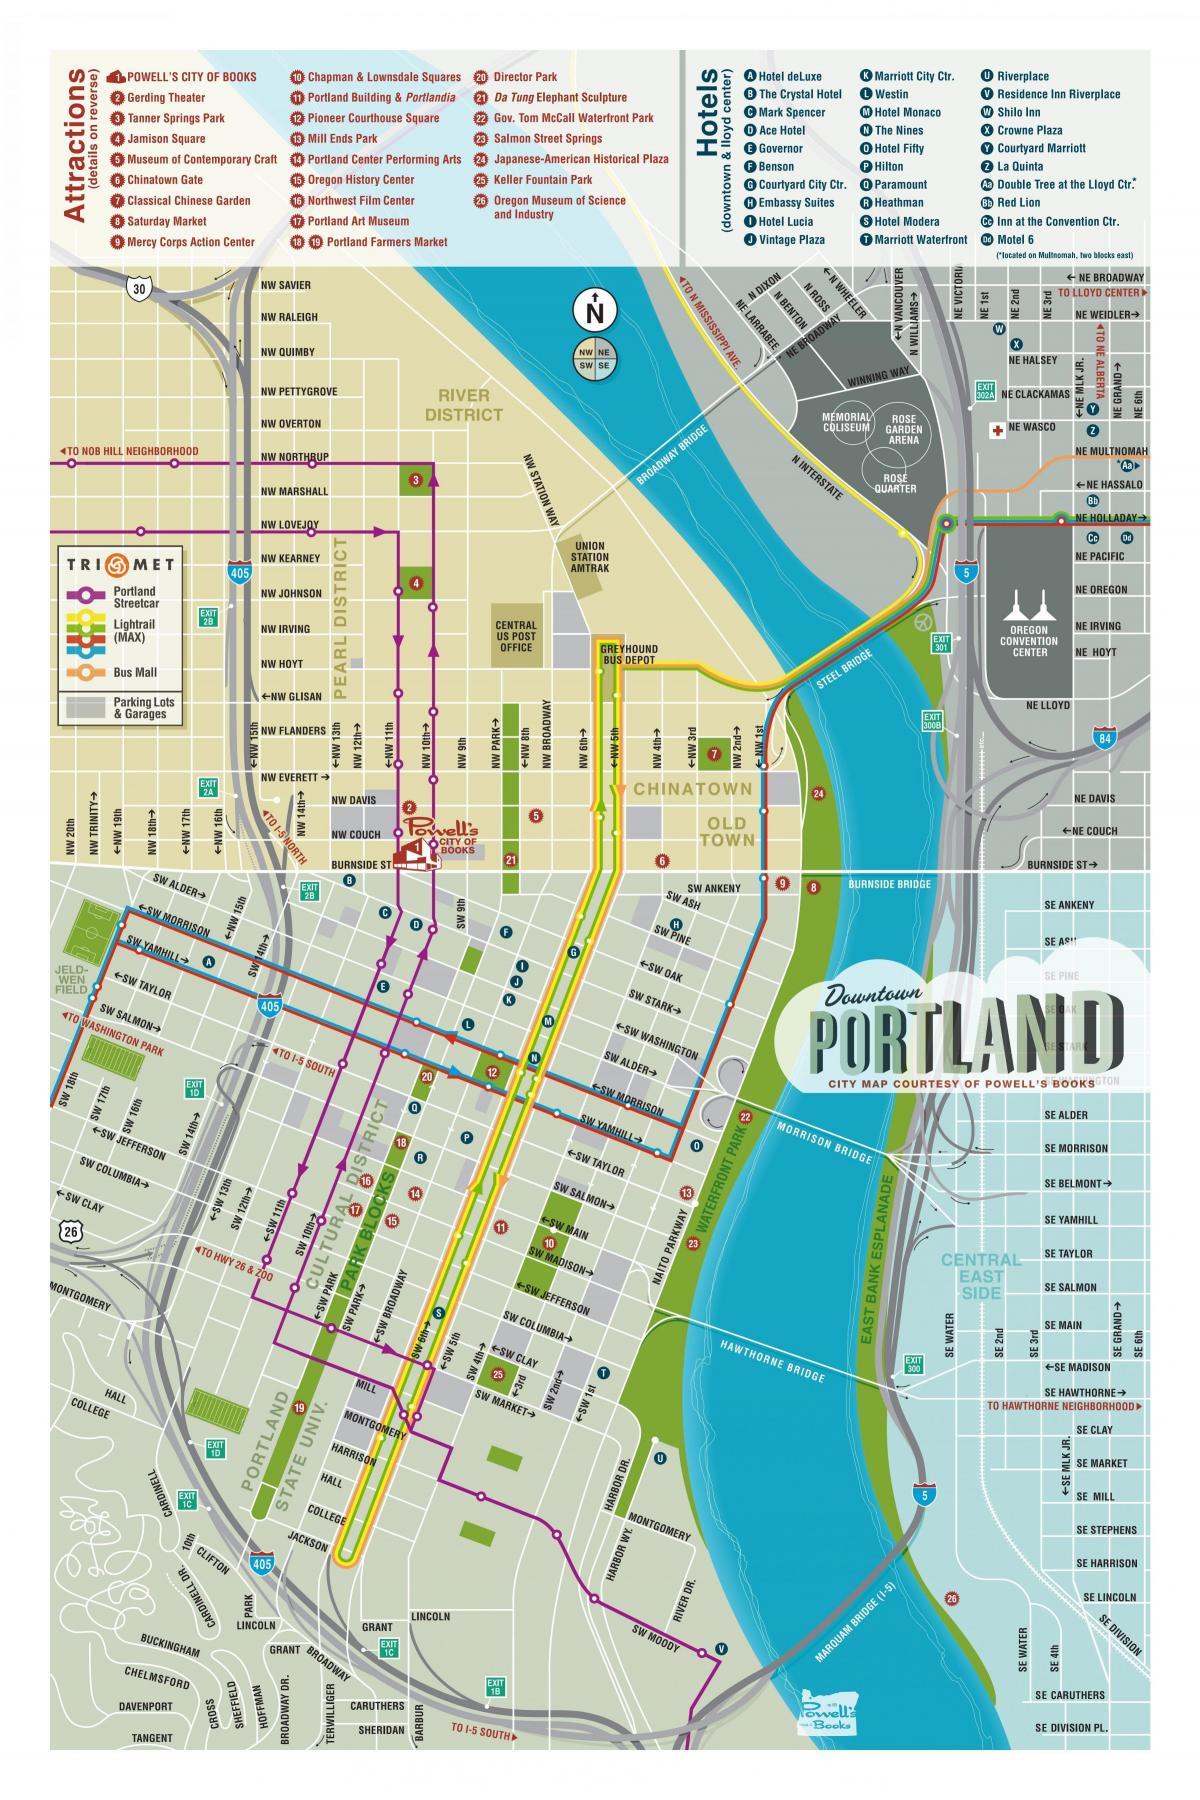 kart over Portland besøkende